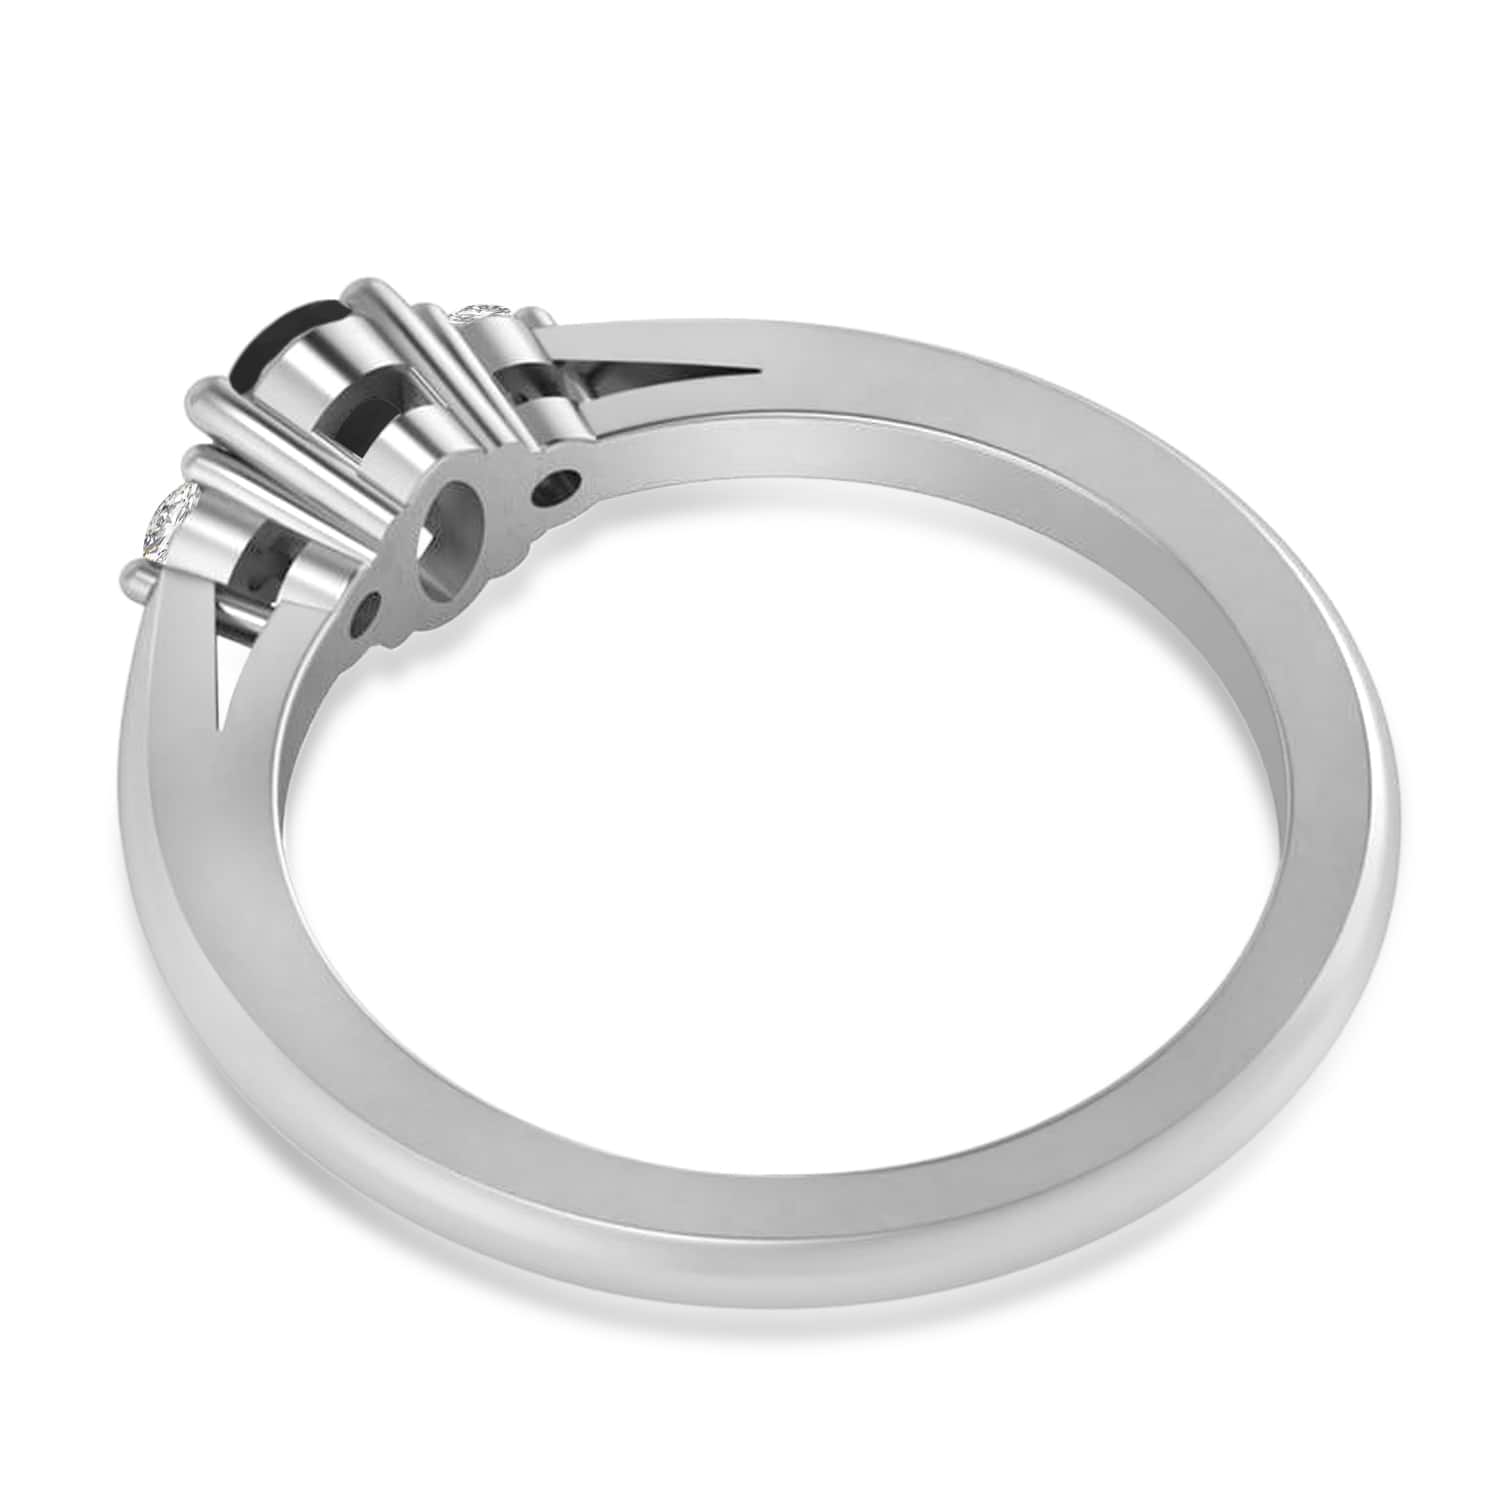 Oval Black & White Diamond Three-Stone Engagement Ring 14k White Gold (0.60ct)